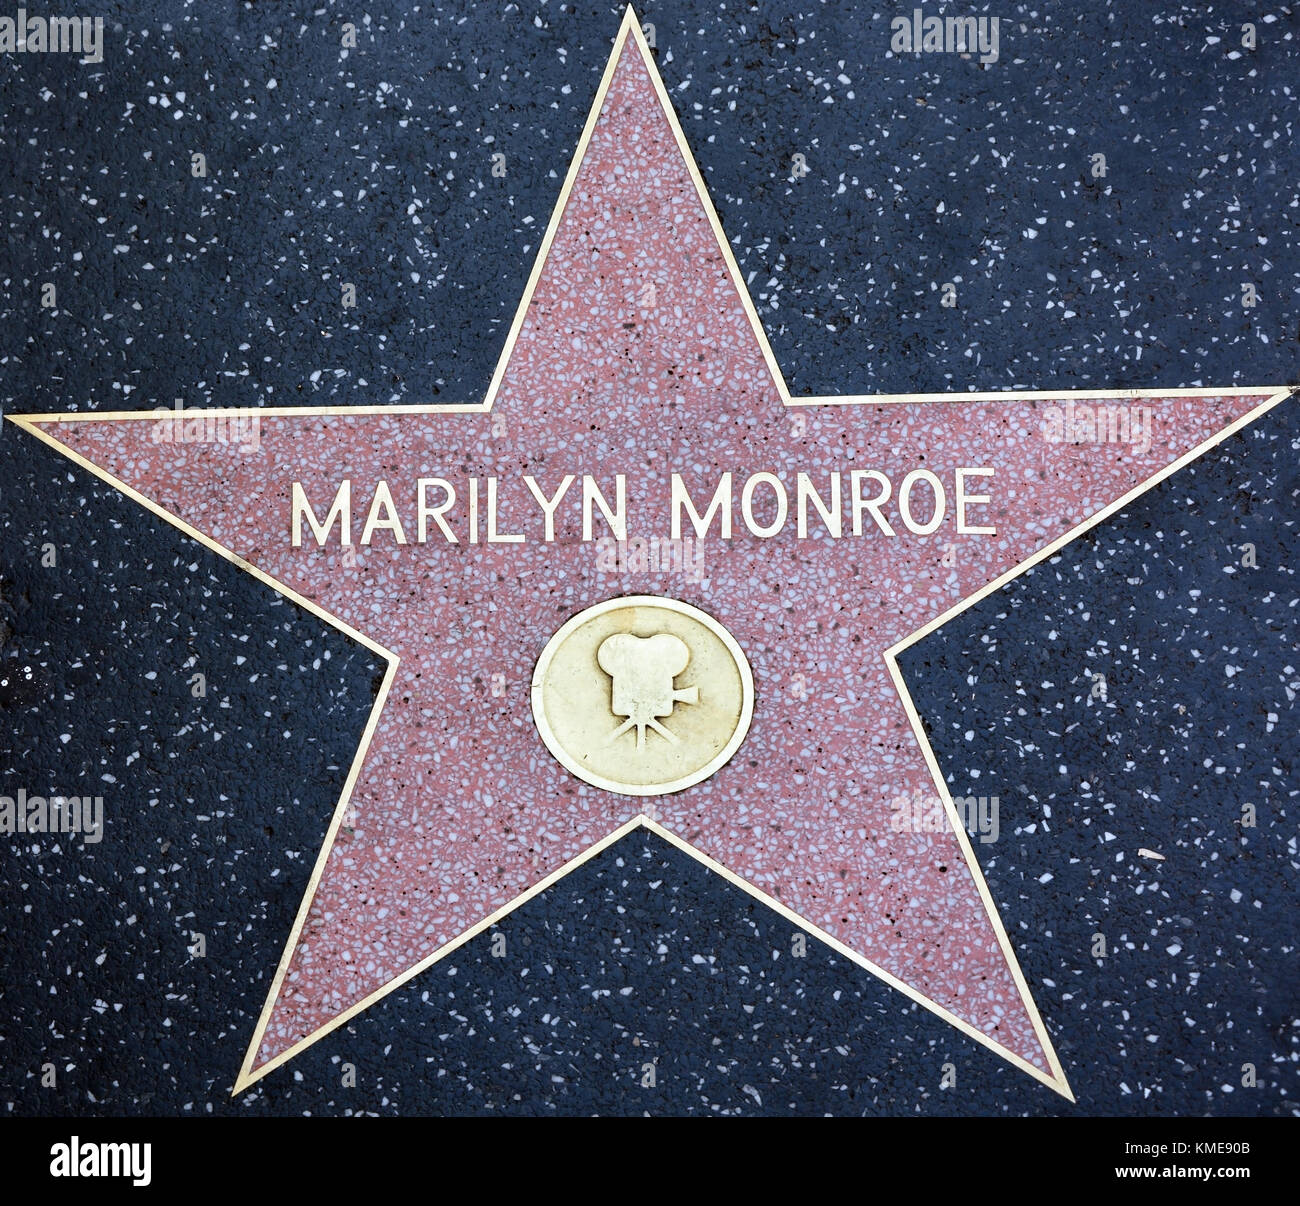 Usa, Hollywood - 23. August 2013: Marilyn Monroe Star auf der Straße Stockfoto